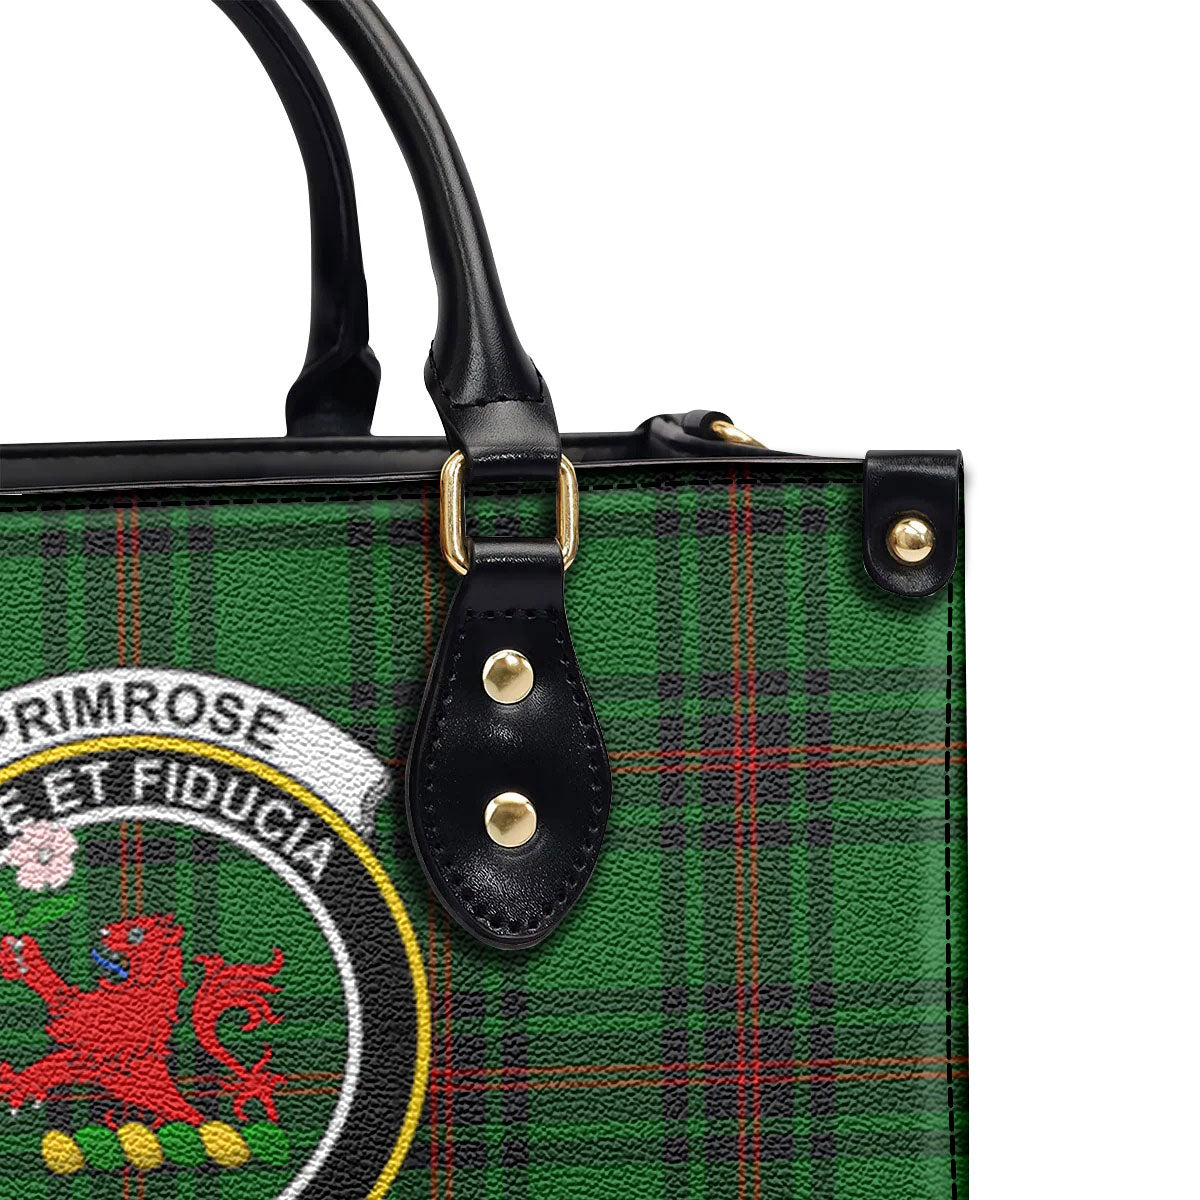 Primrose Tartan Crest Leather Handbag